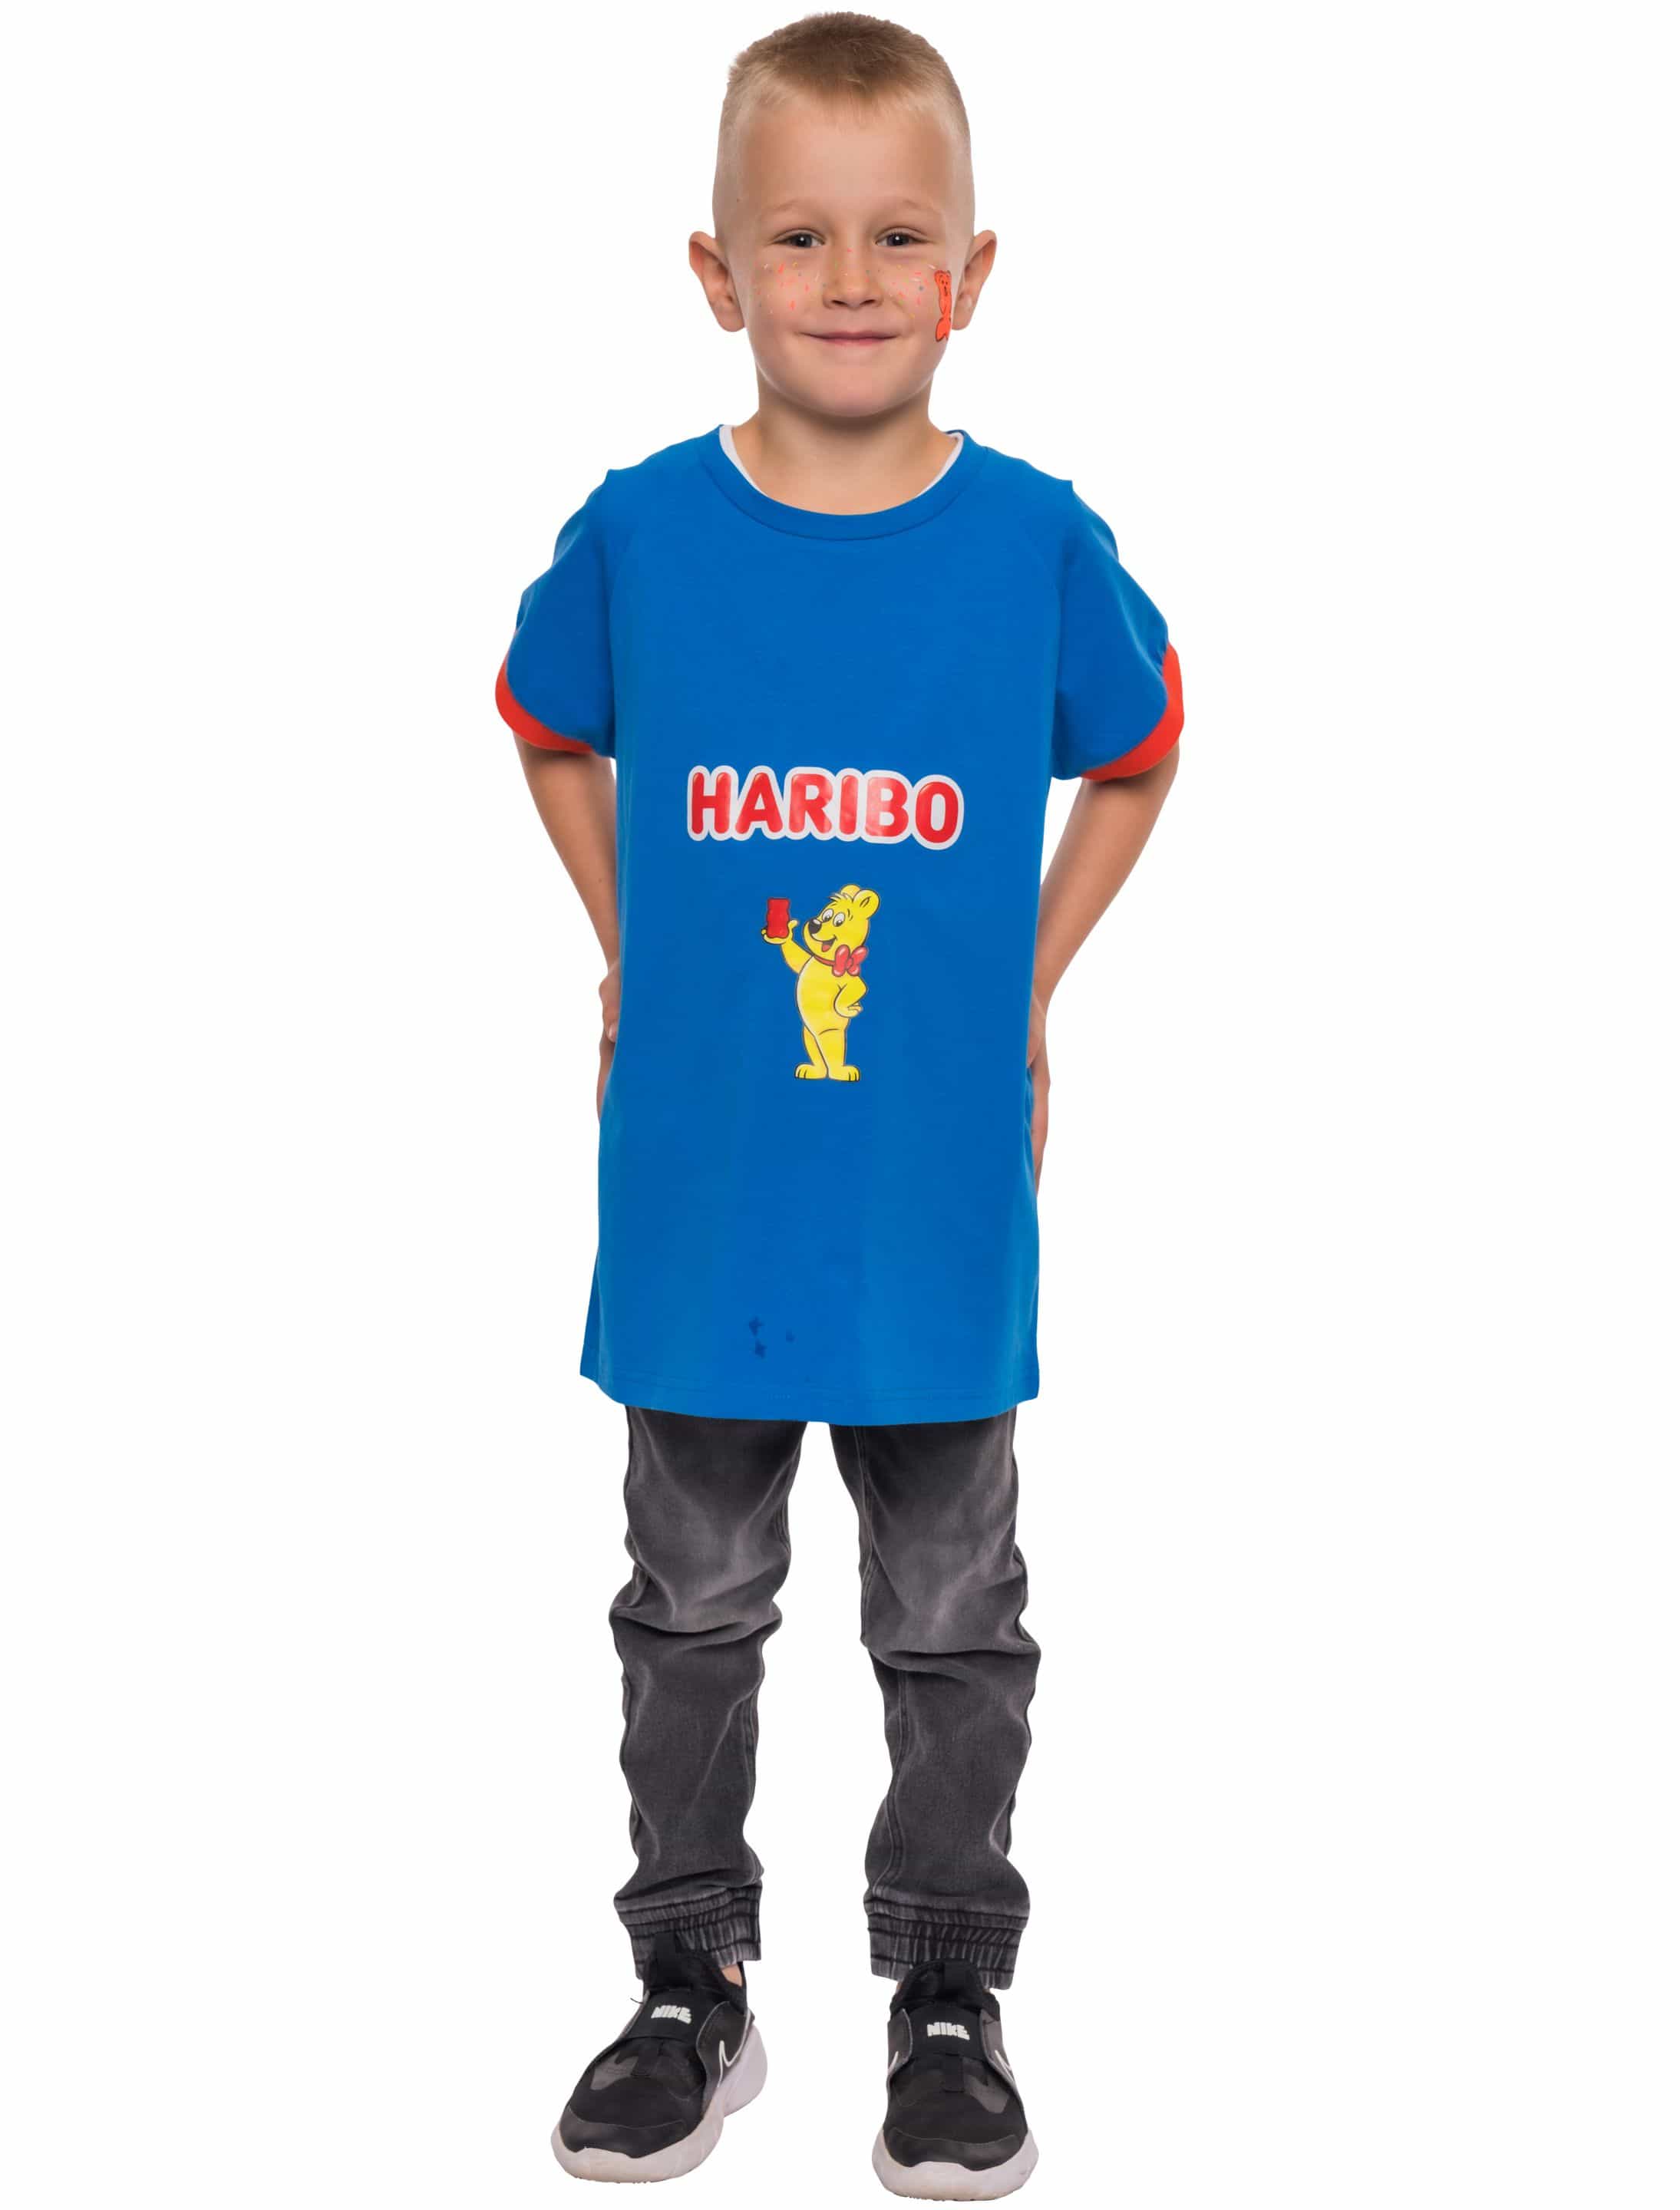 T-Shirt HARIBO Goldbären blau 134